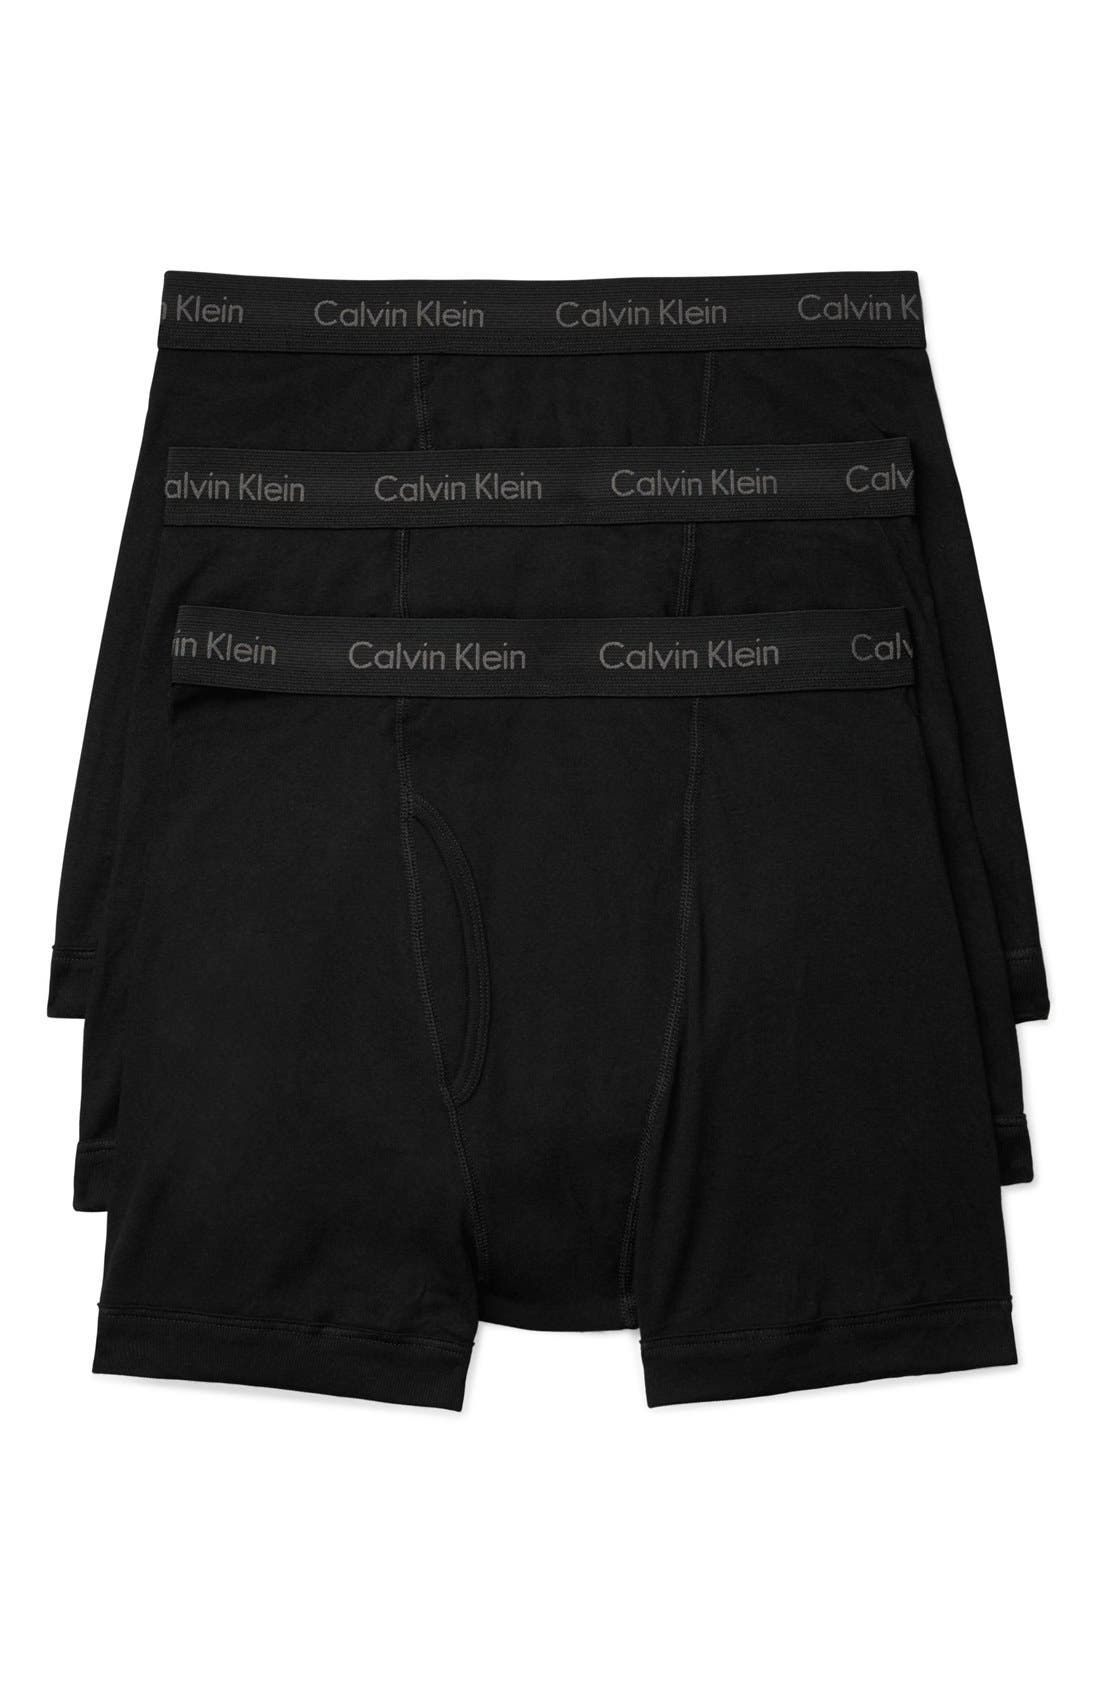 UPC 608279055396 product image for Men's Calvin Klein 3-Pack Boxer Briefs, Size X-Large - Black | upcitemdb.com